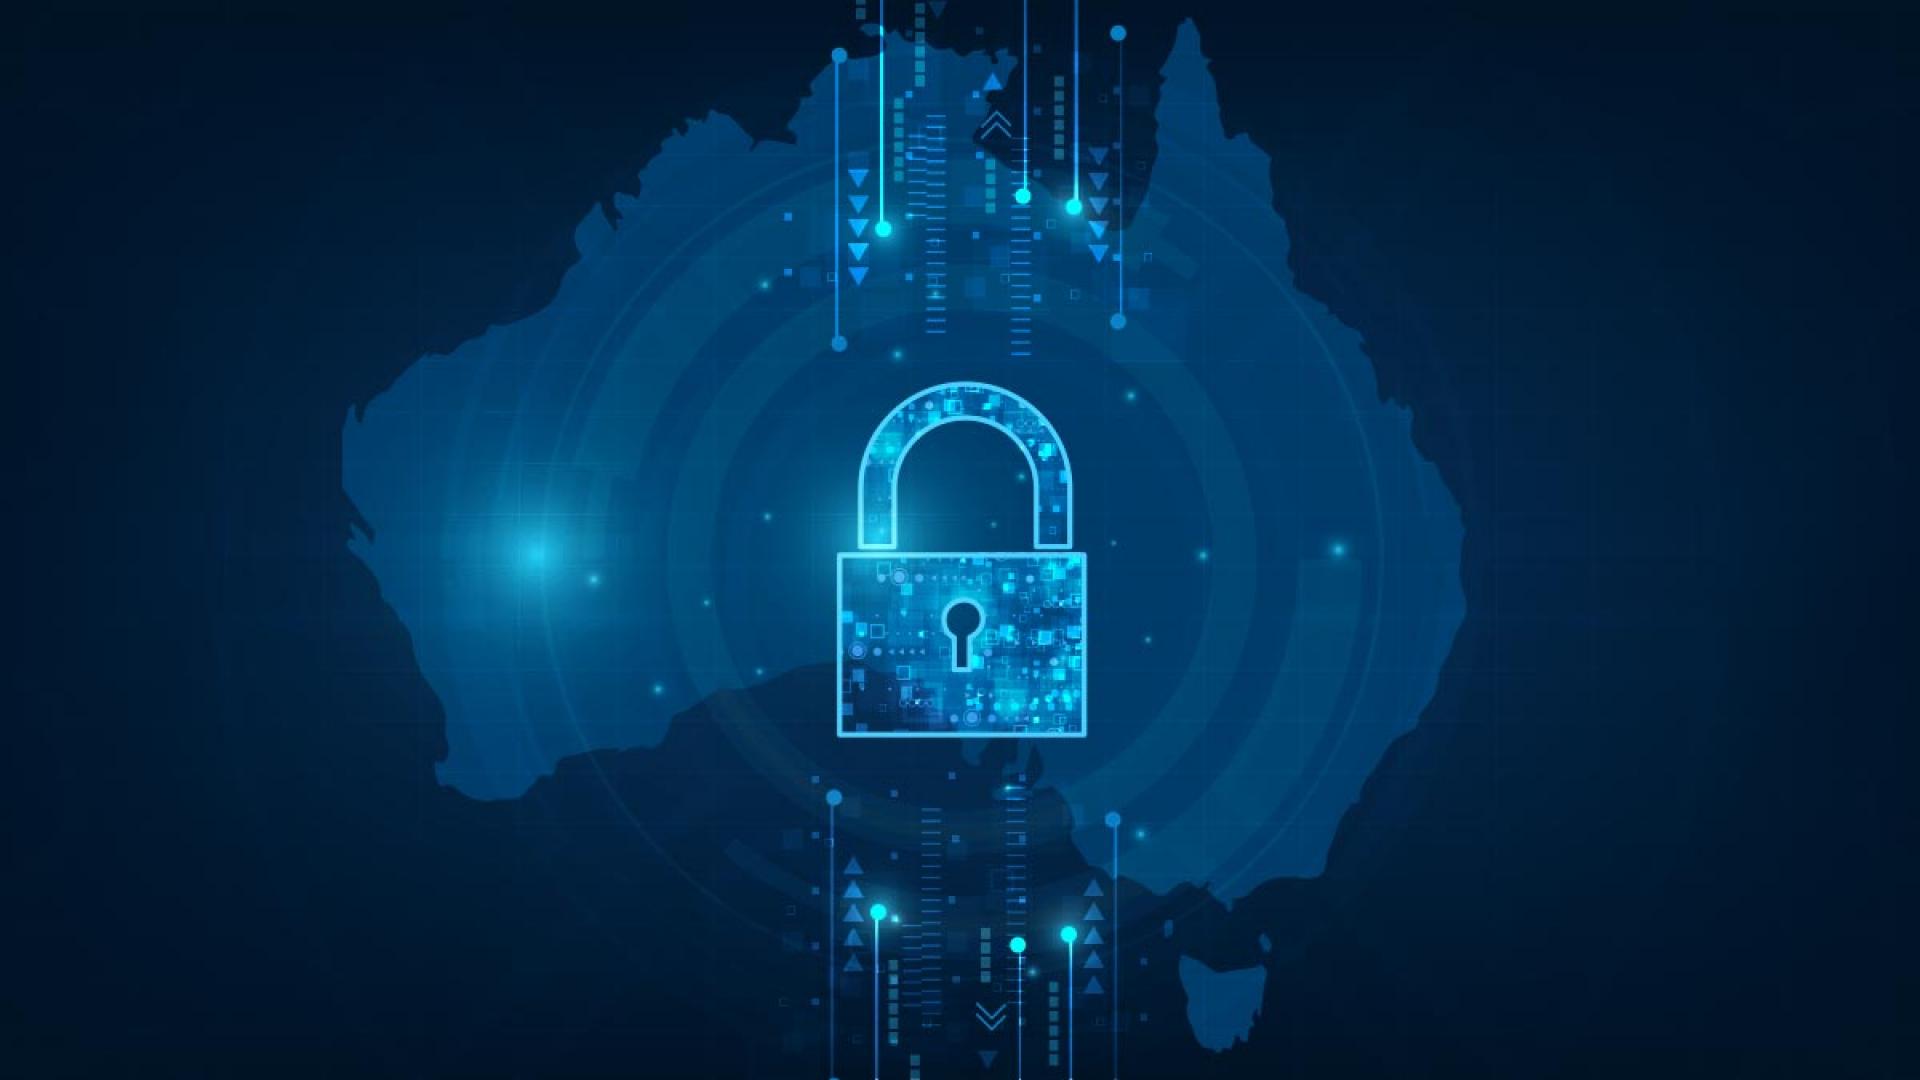 Australia under cyber attack